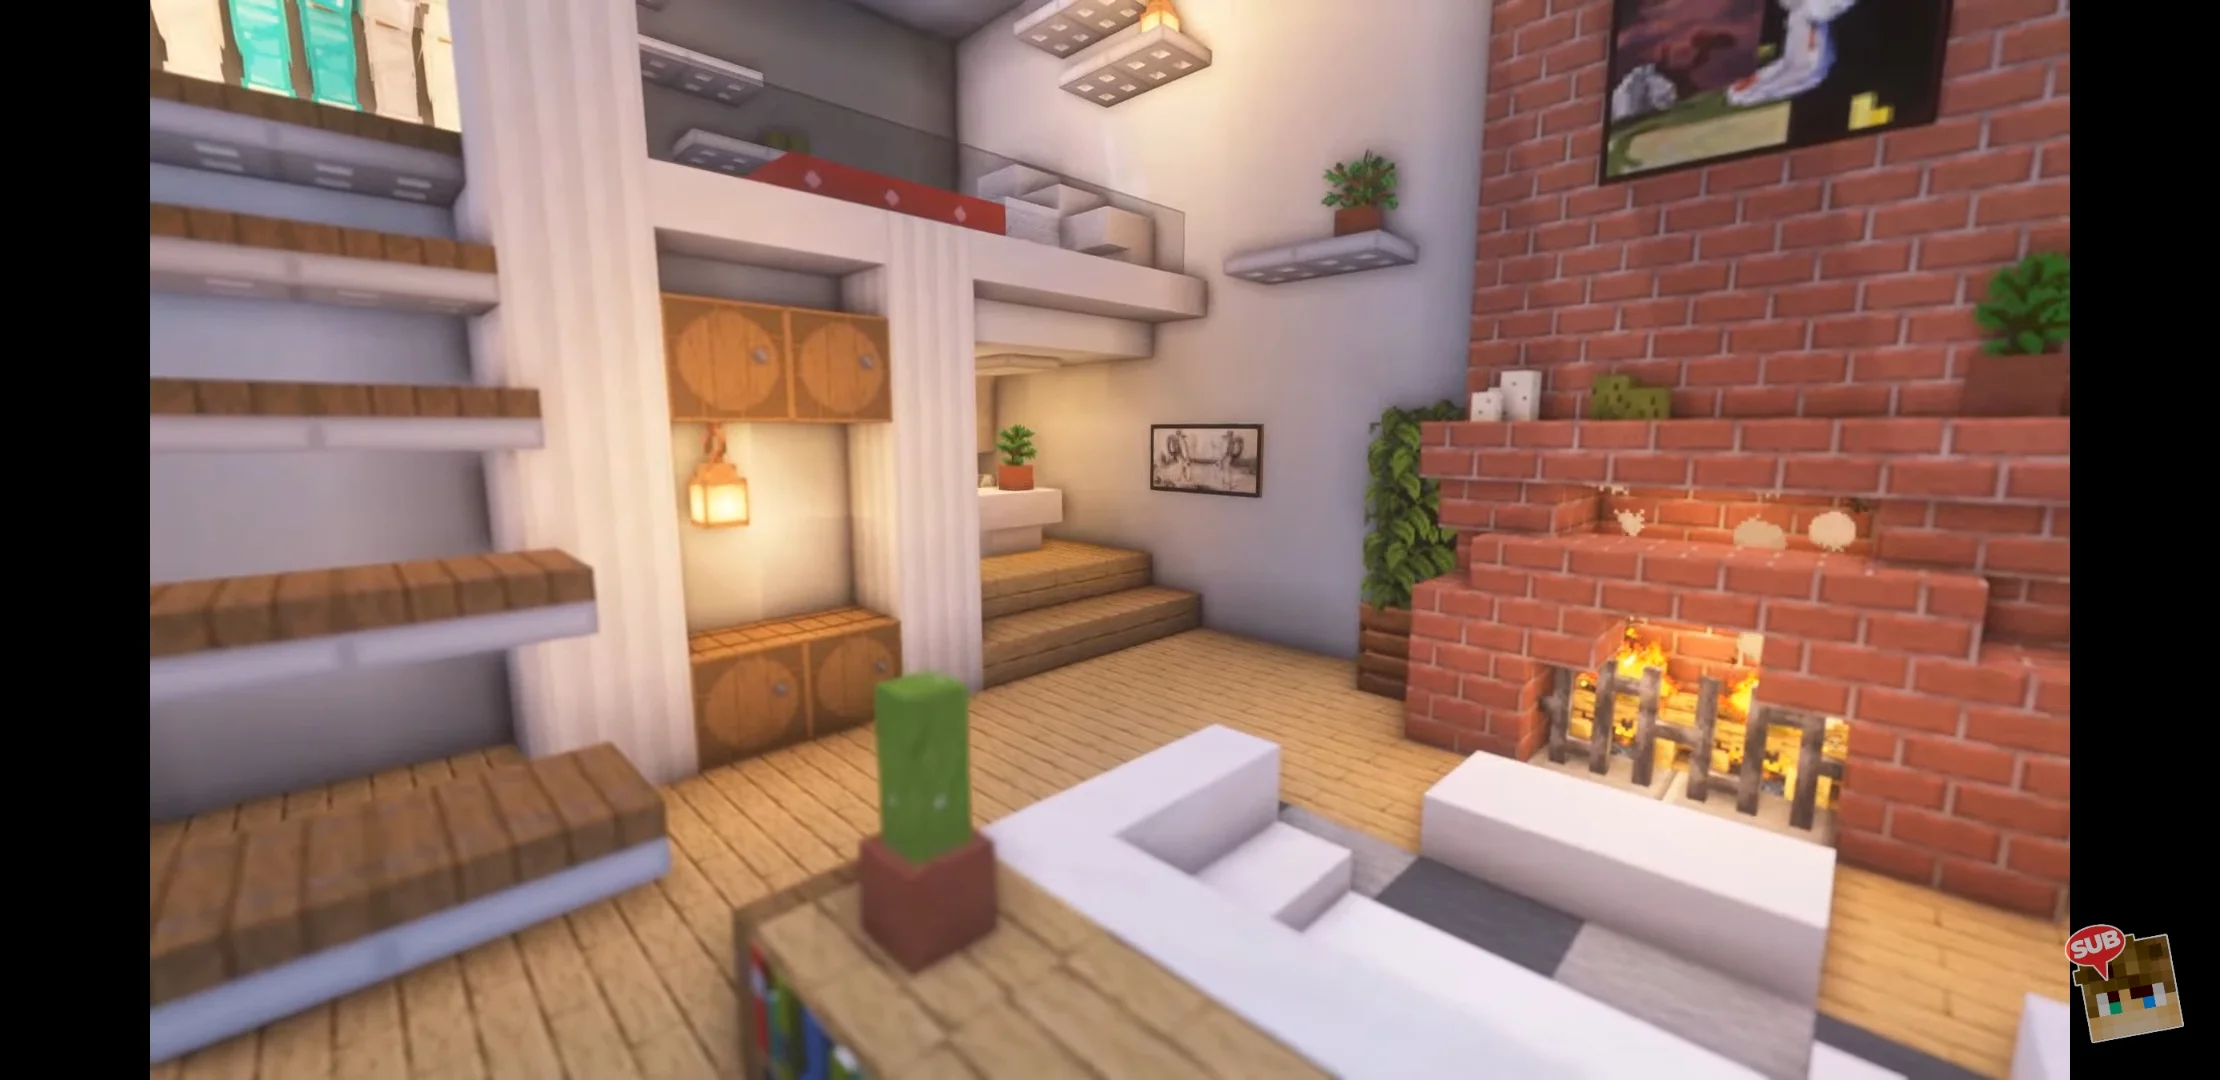 Top 30 Best Minecraft Room Ideas